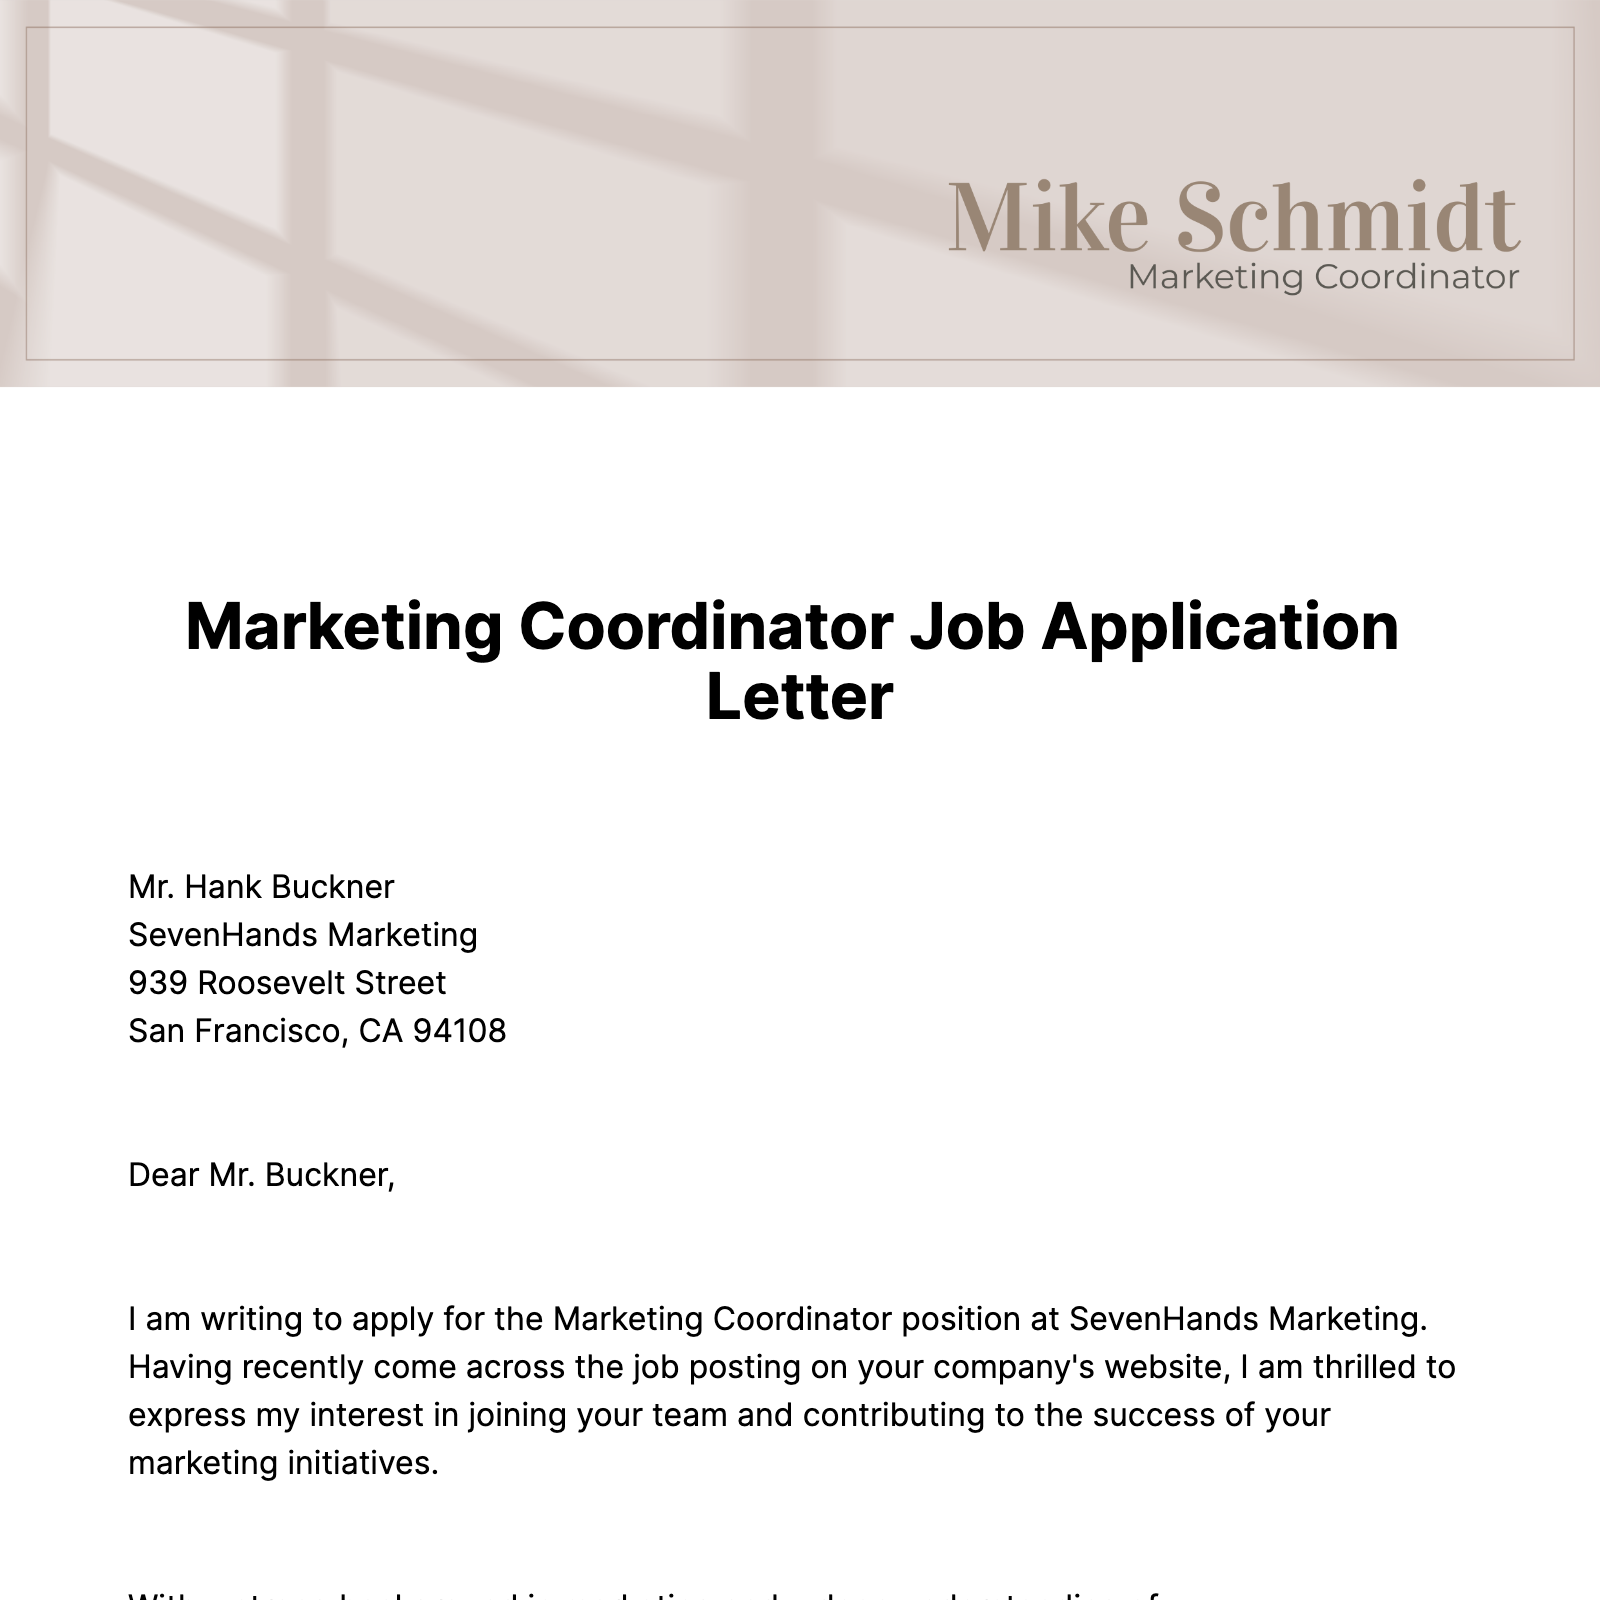 Marketing Coordinator Job Application Letter Template